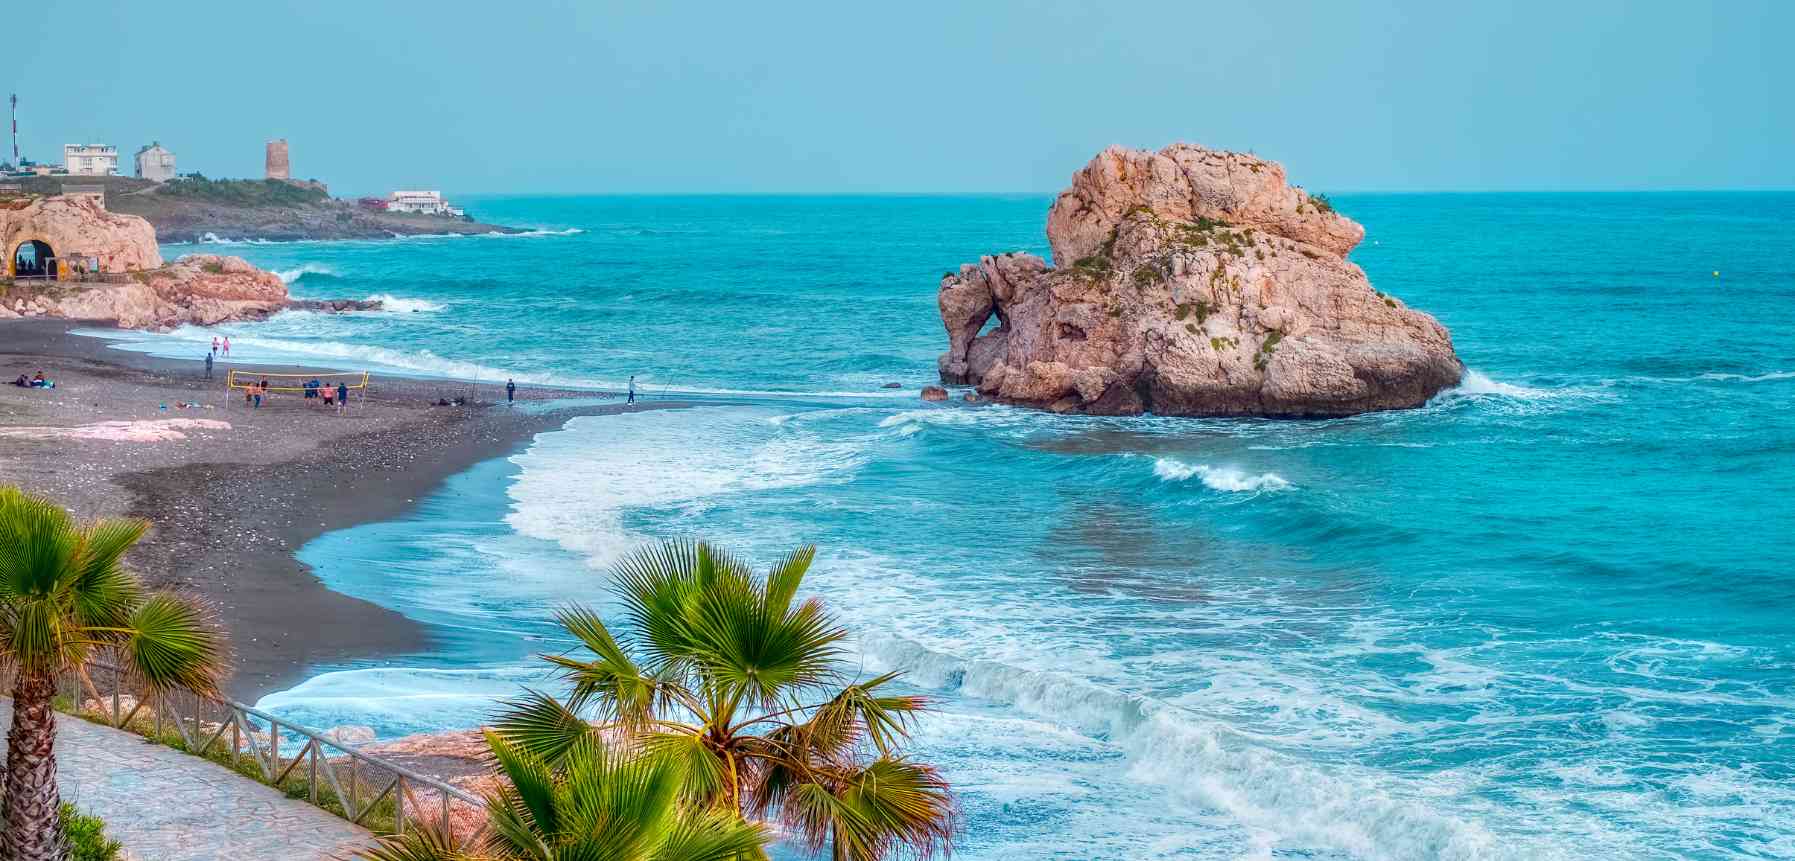 Visit the Beaches of the Costa del Sol